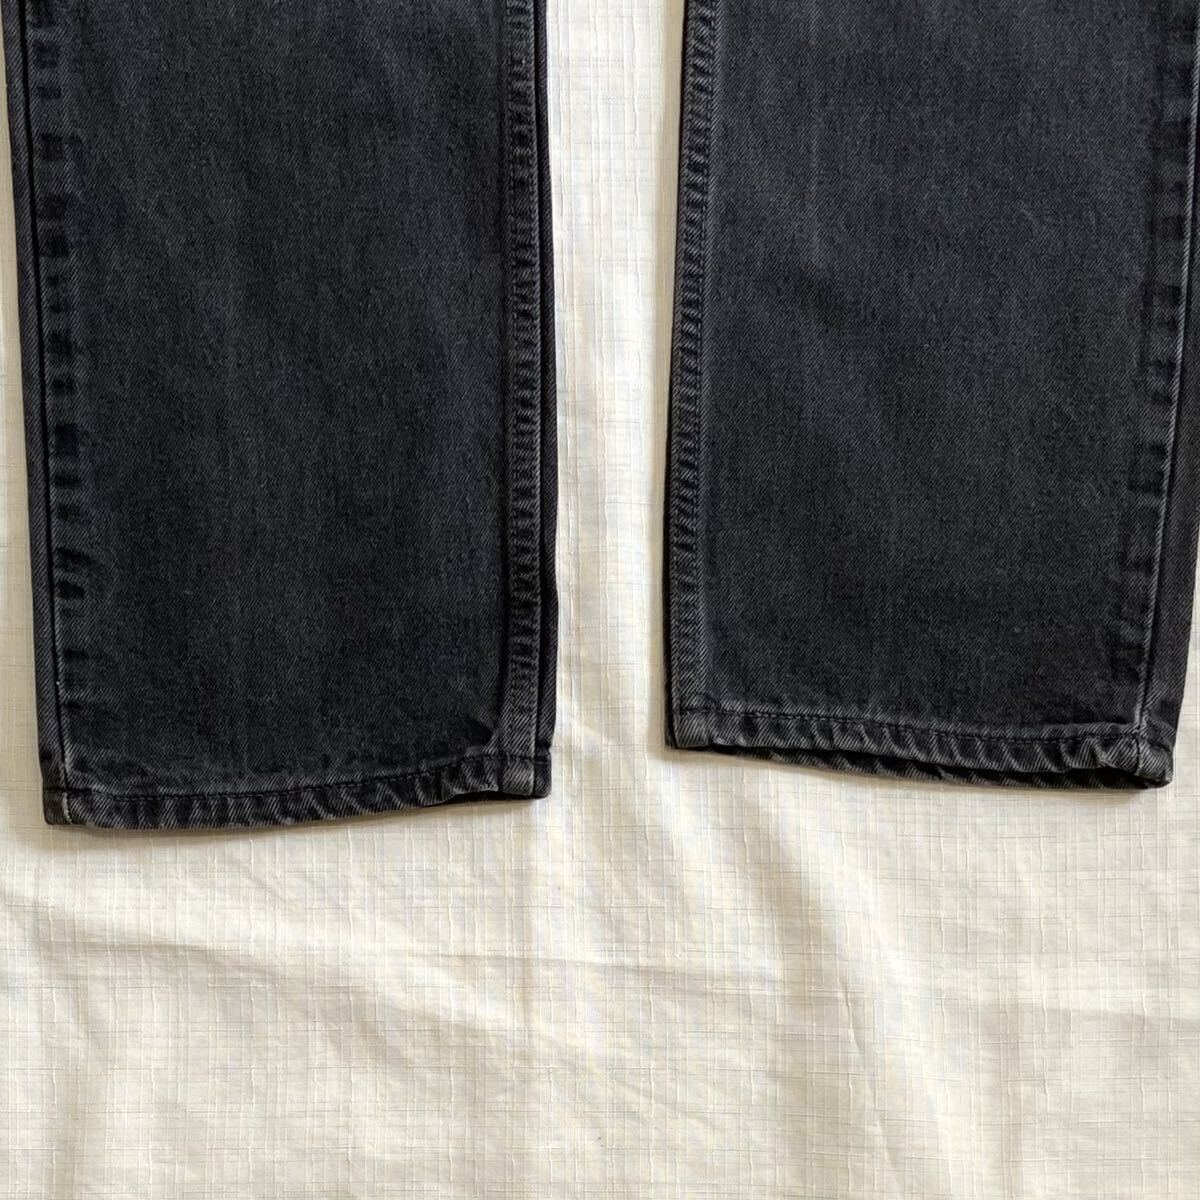 90sビンテージ LEVIS 505 USA製 黒 ブラックデニム パンツ W32 裾 オリジナル アメリカ製 ブラックジーンズ リーバイス LEVI'S 米国製 古着_裾はオリジナルのままです。裾上げなしです